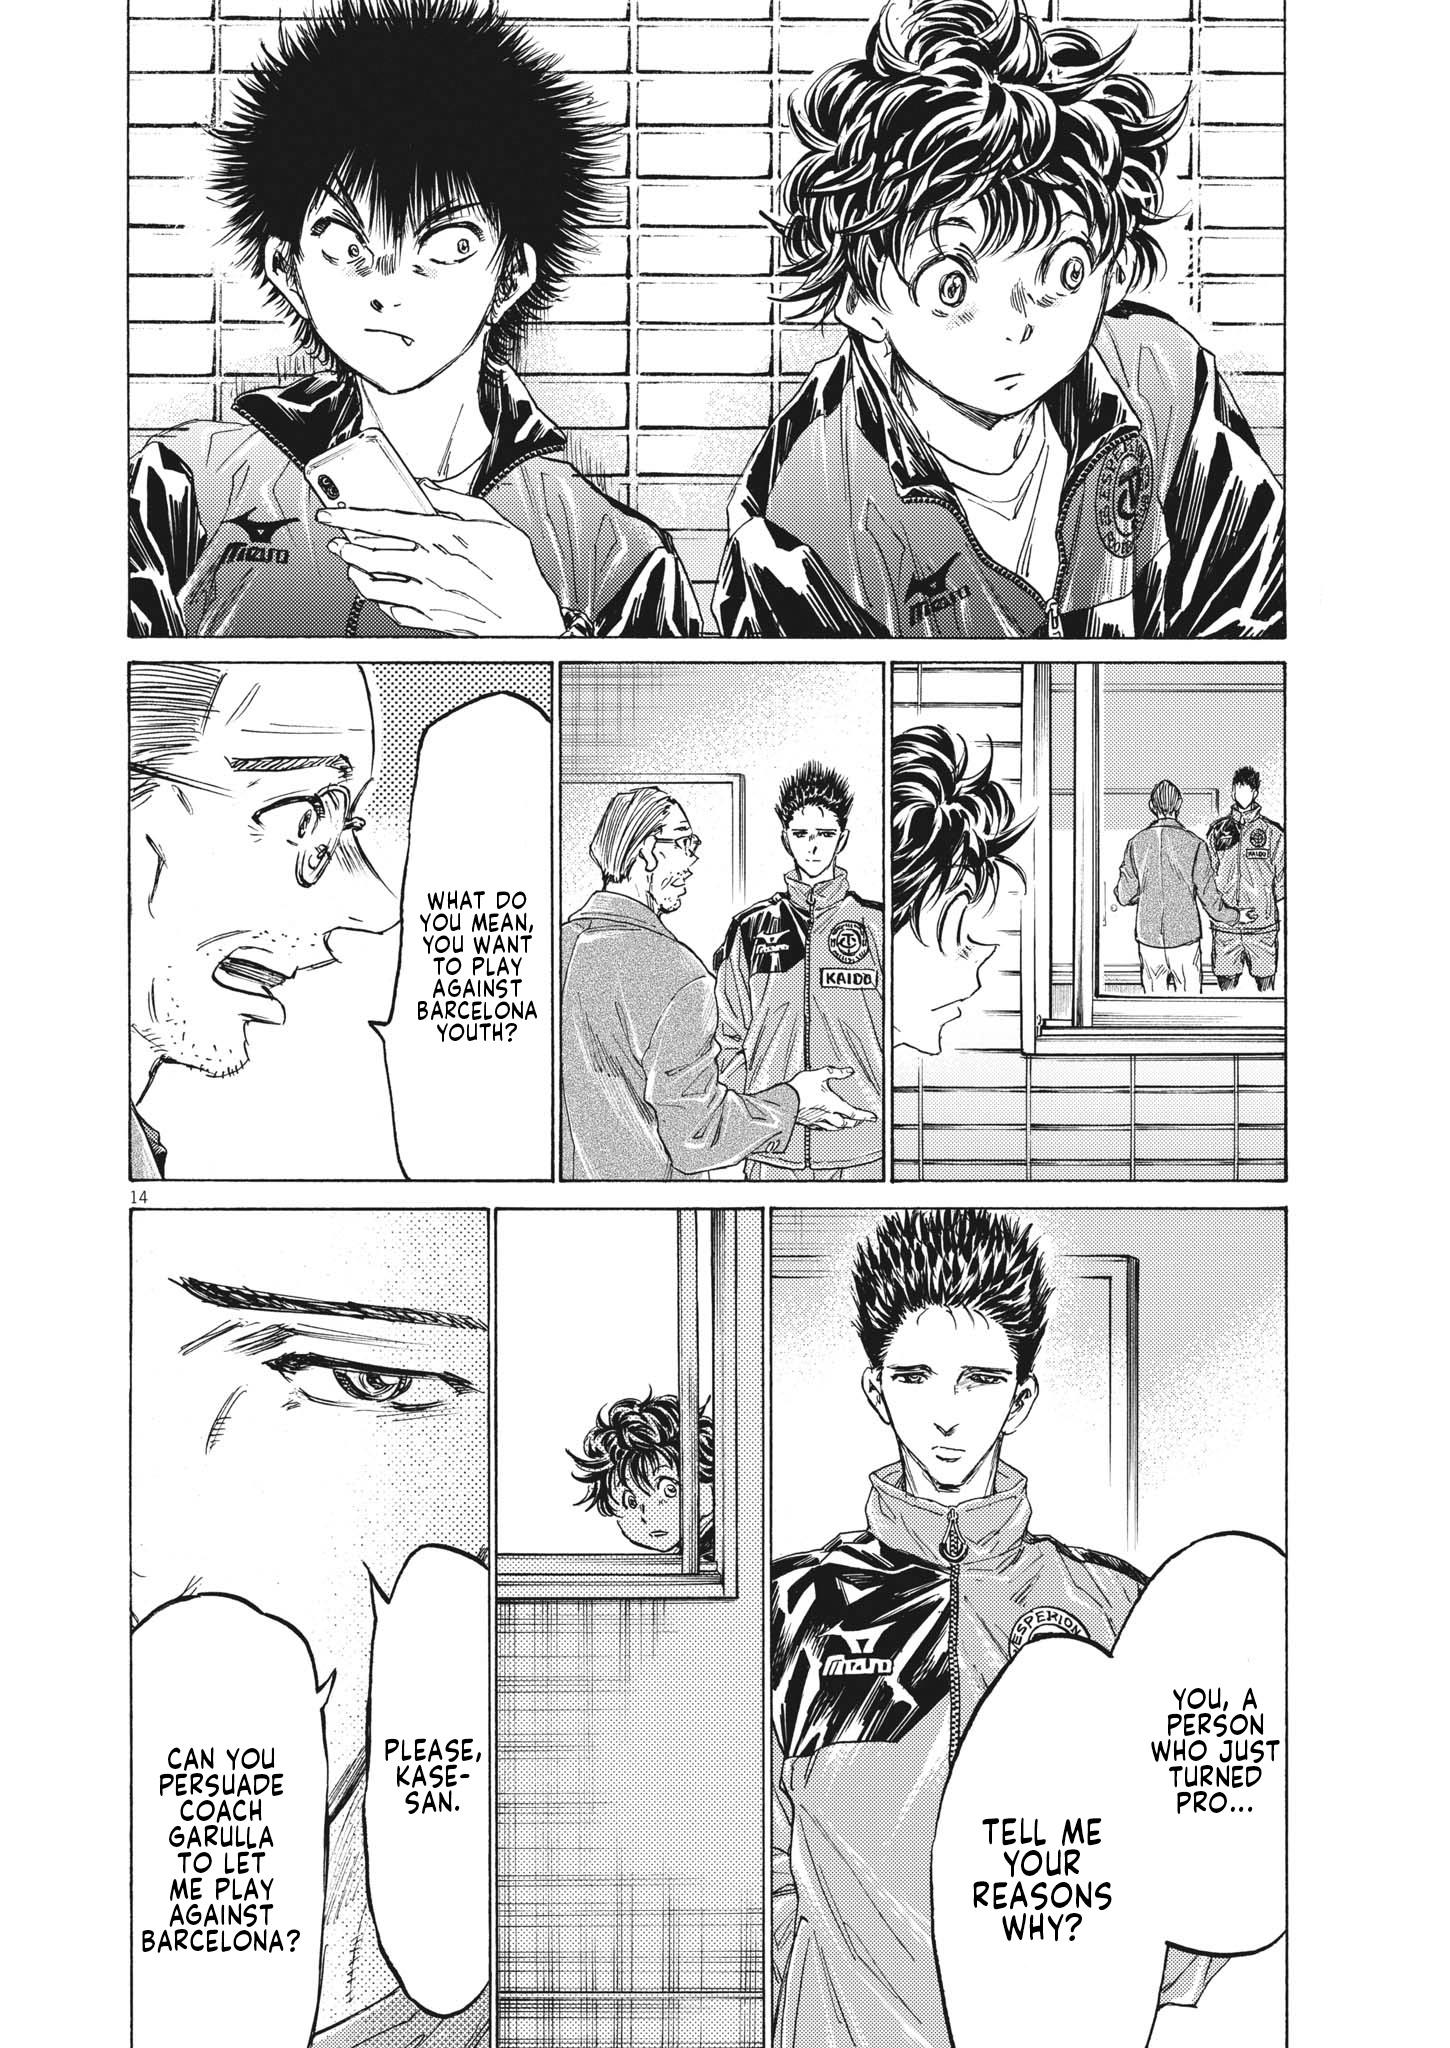 Ao Ashi Vol.28 Ch.292 Page 19 - Mangago